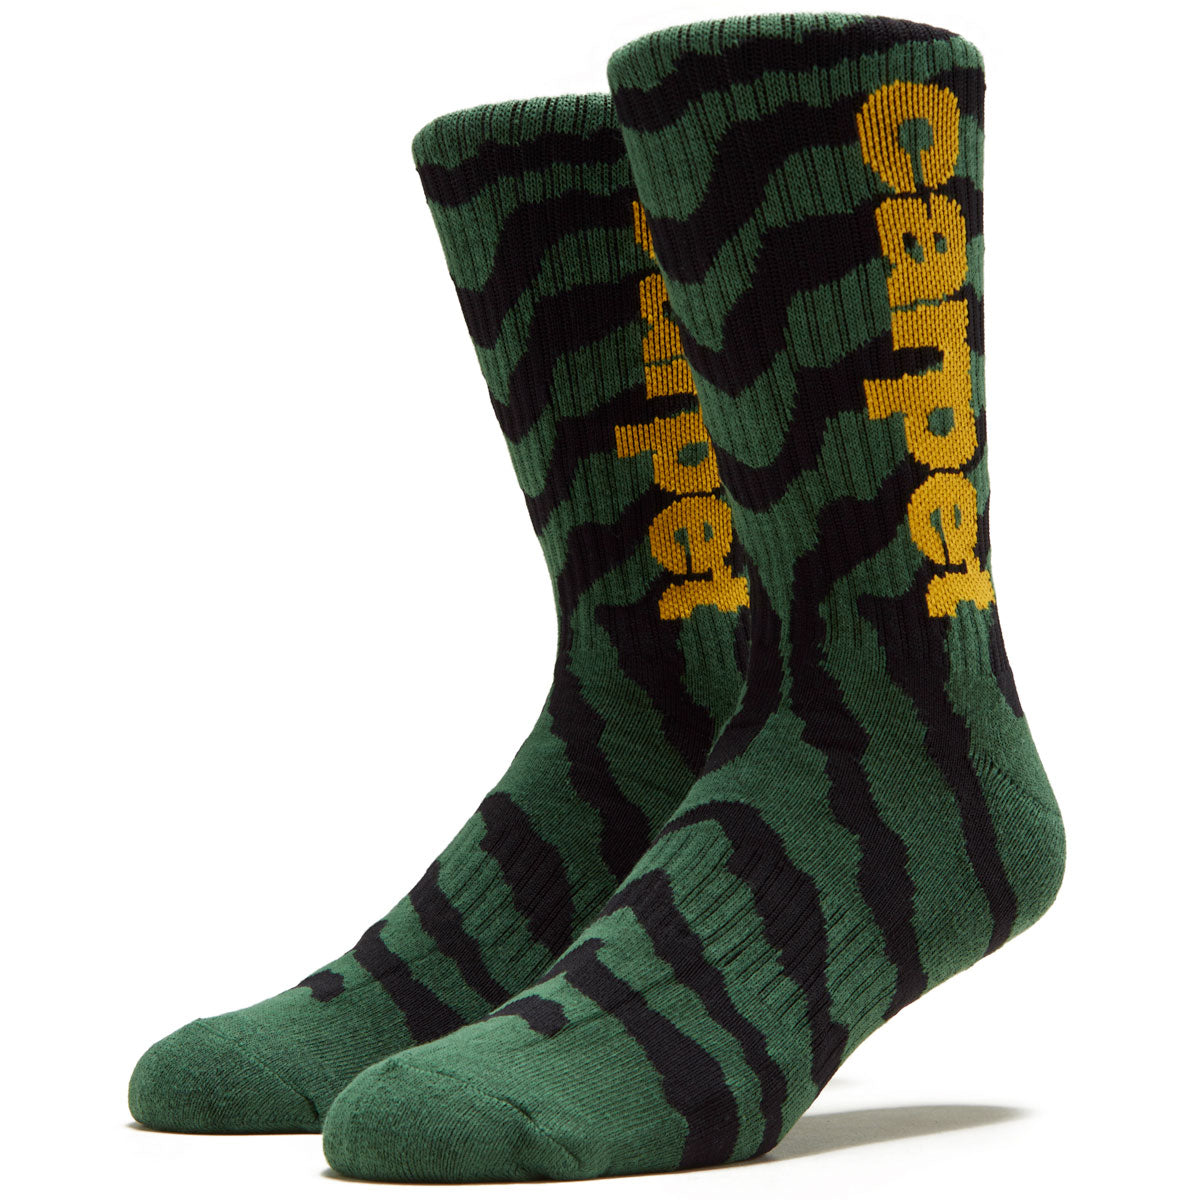 Carpet Company Spiral Socks - Green image 1